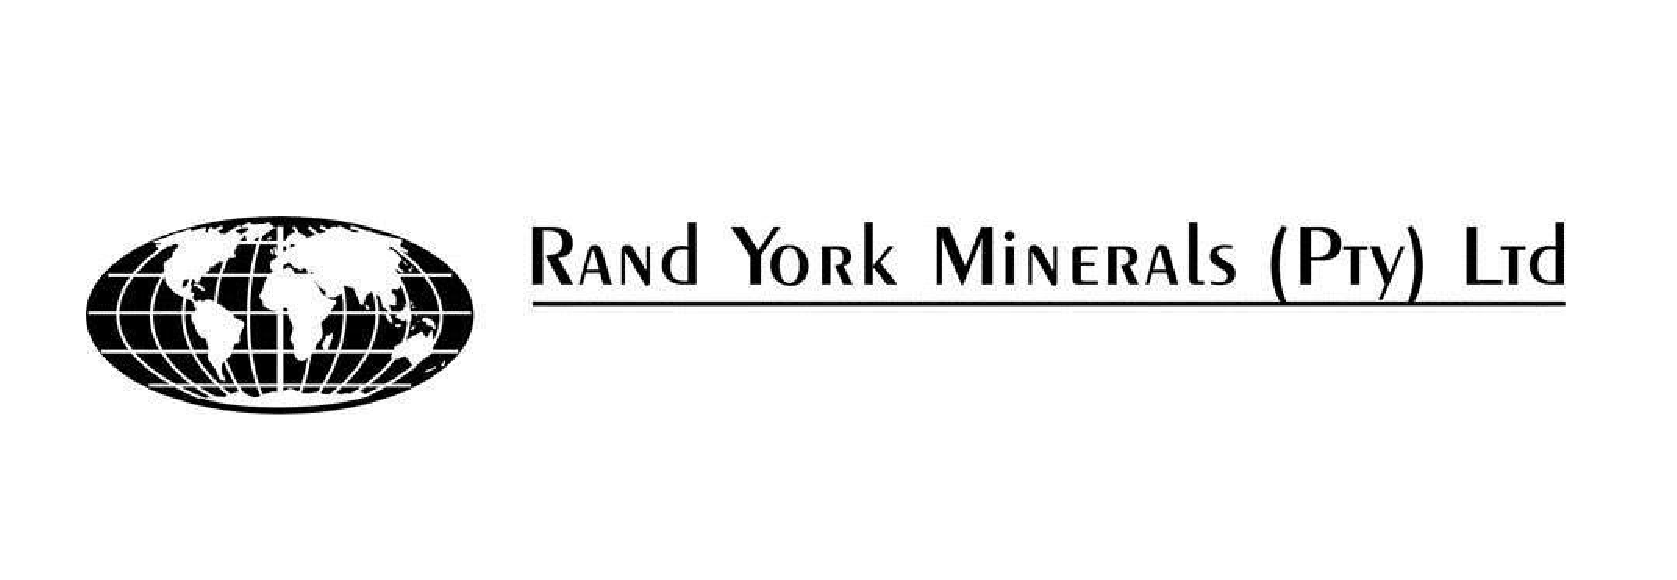 Partners | and York Minerals SEEIF Silices Gilarranz | Colaboradores | Euskatfund, Maquinaria y productos de fundición